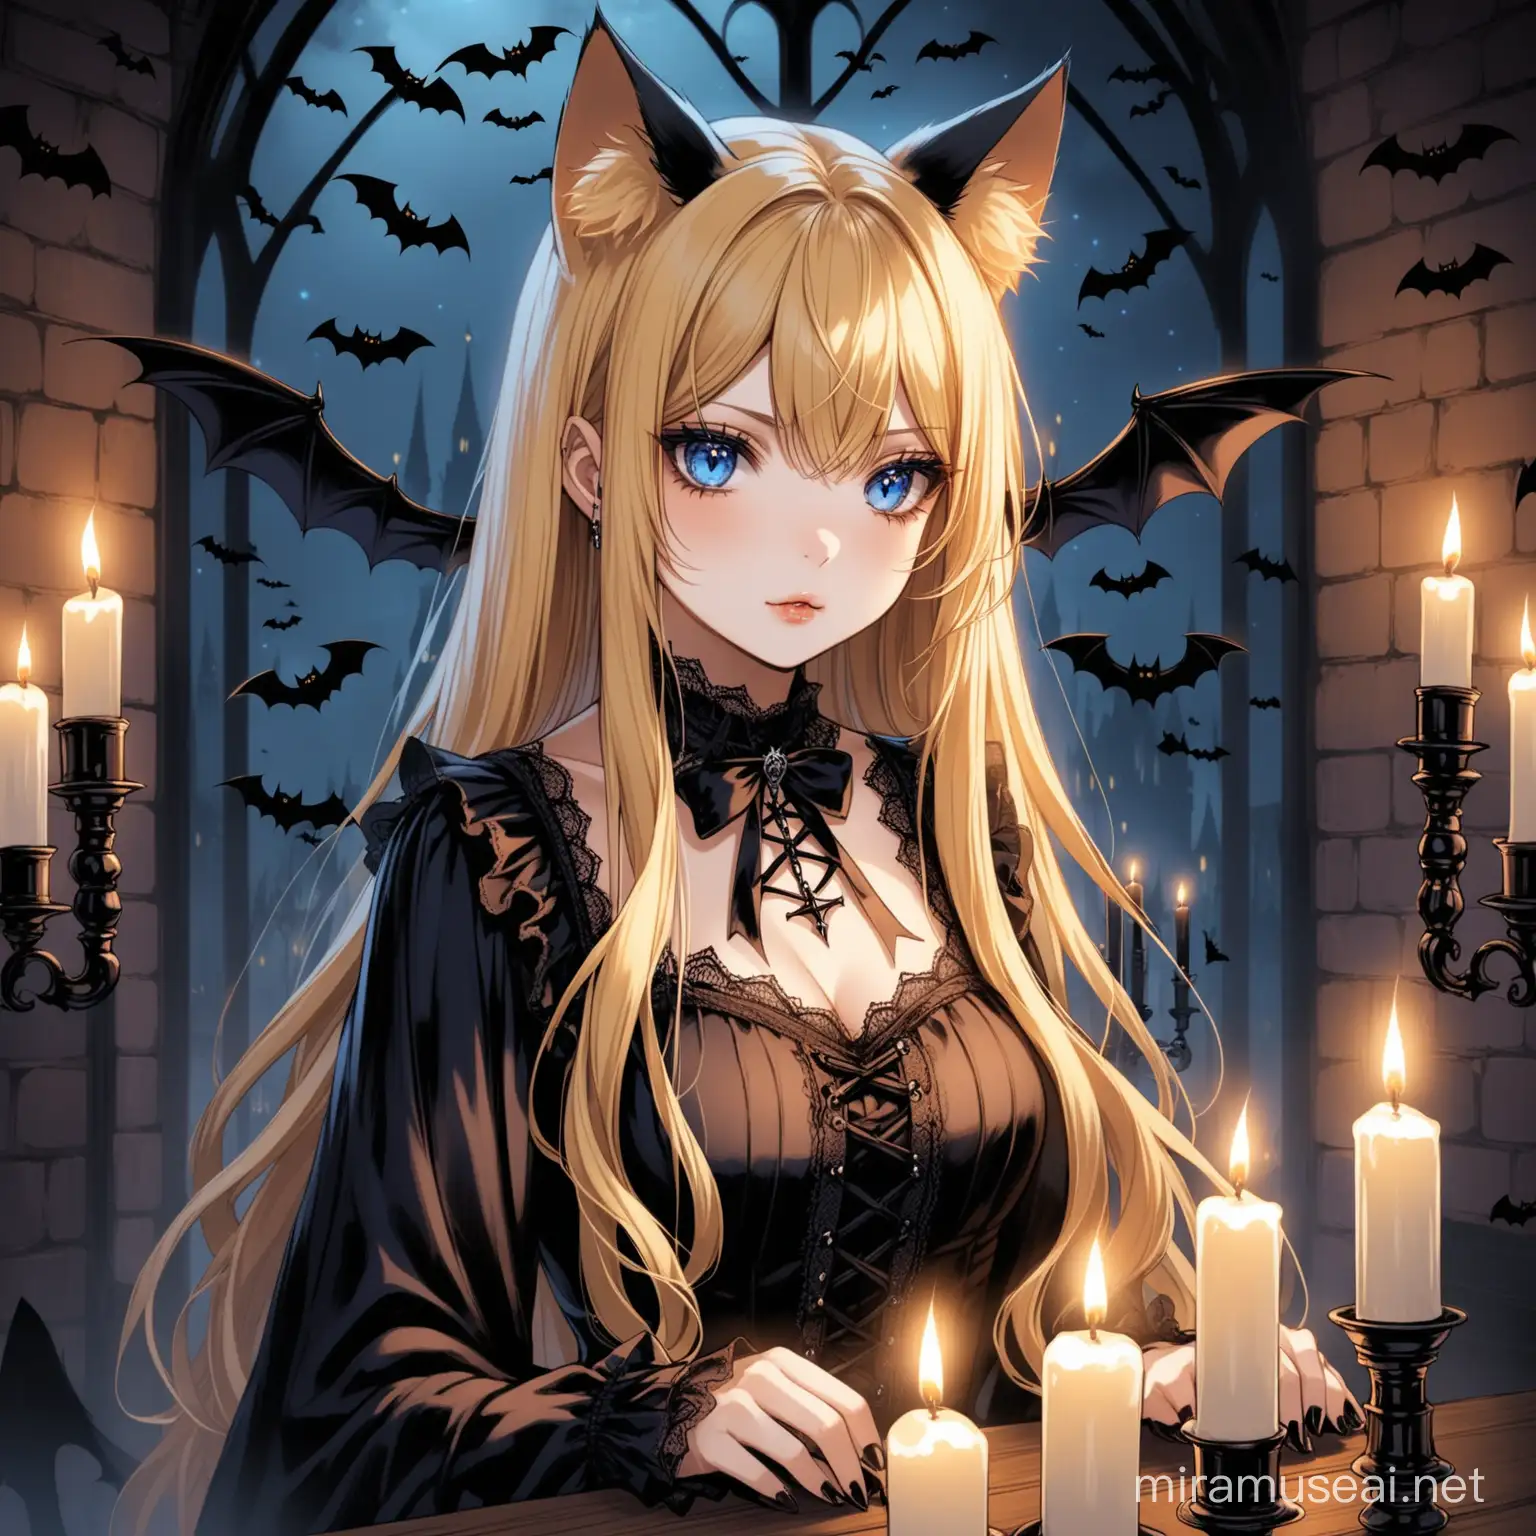 Gothic, long blonde hair, dark blue eyes, cat ears, candles, bats